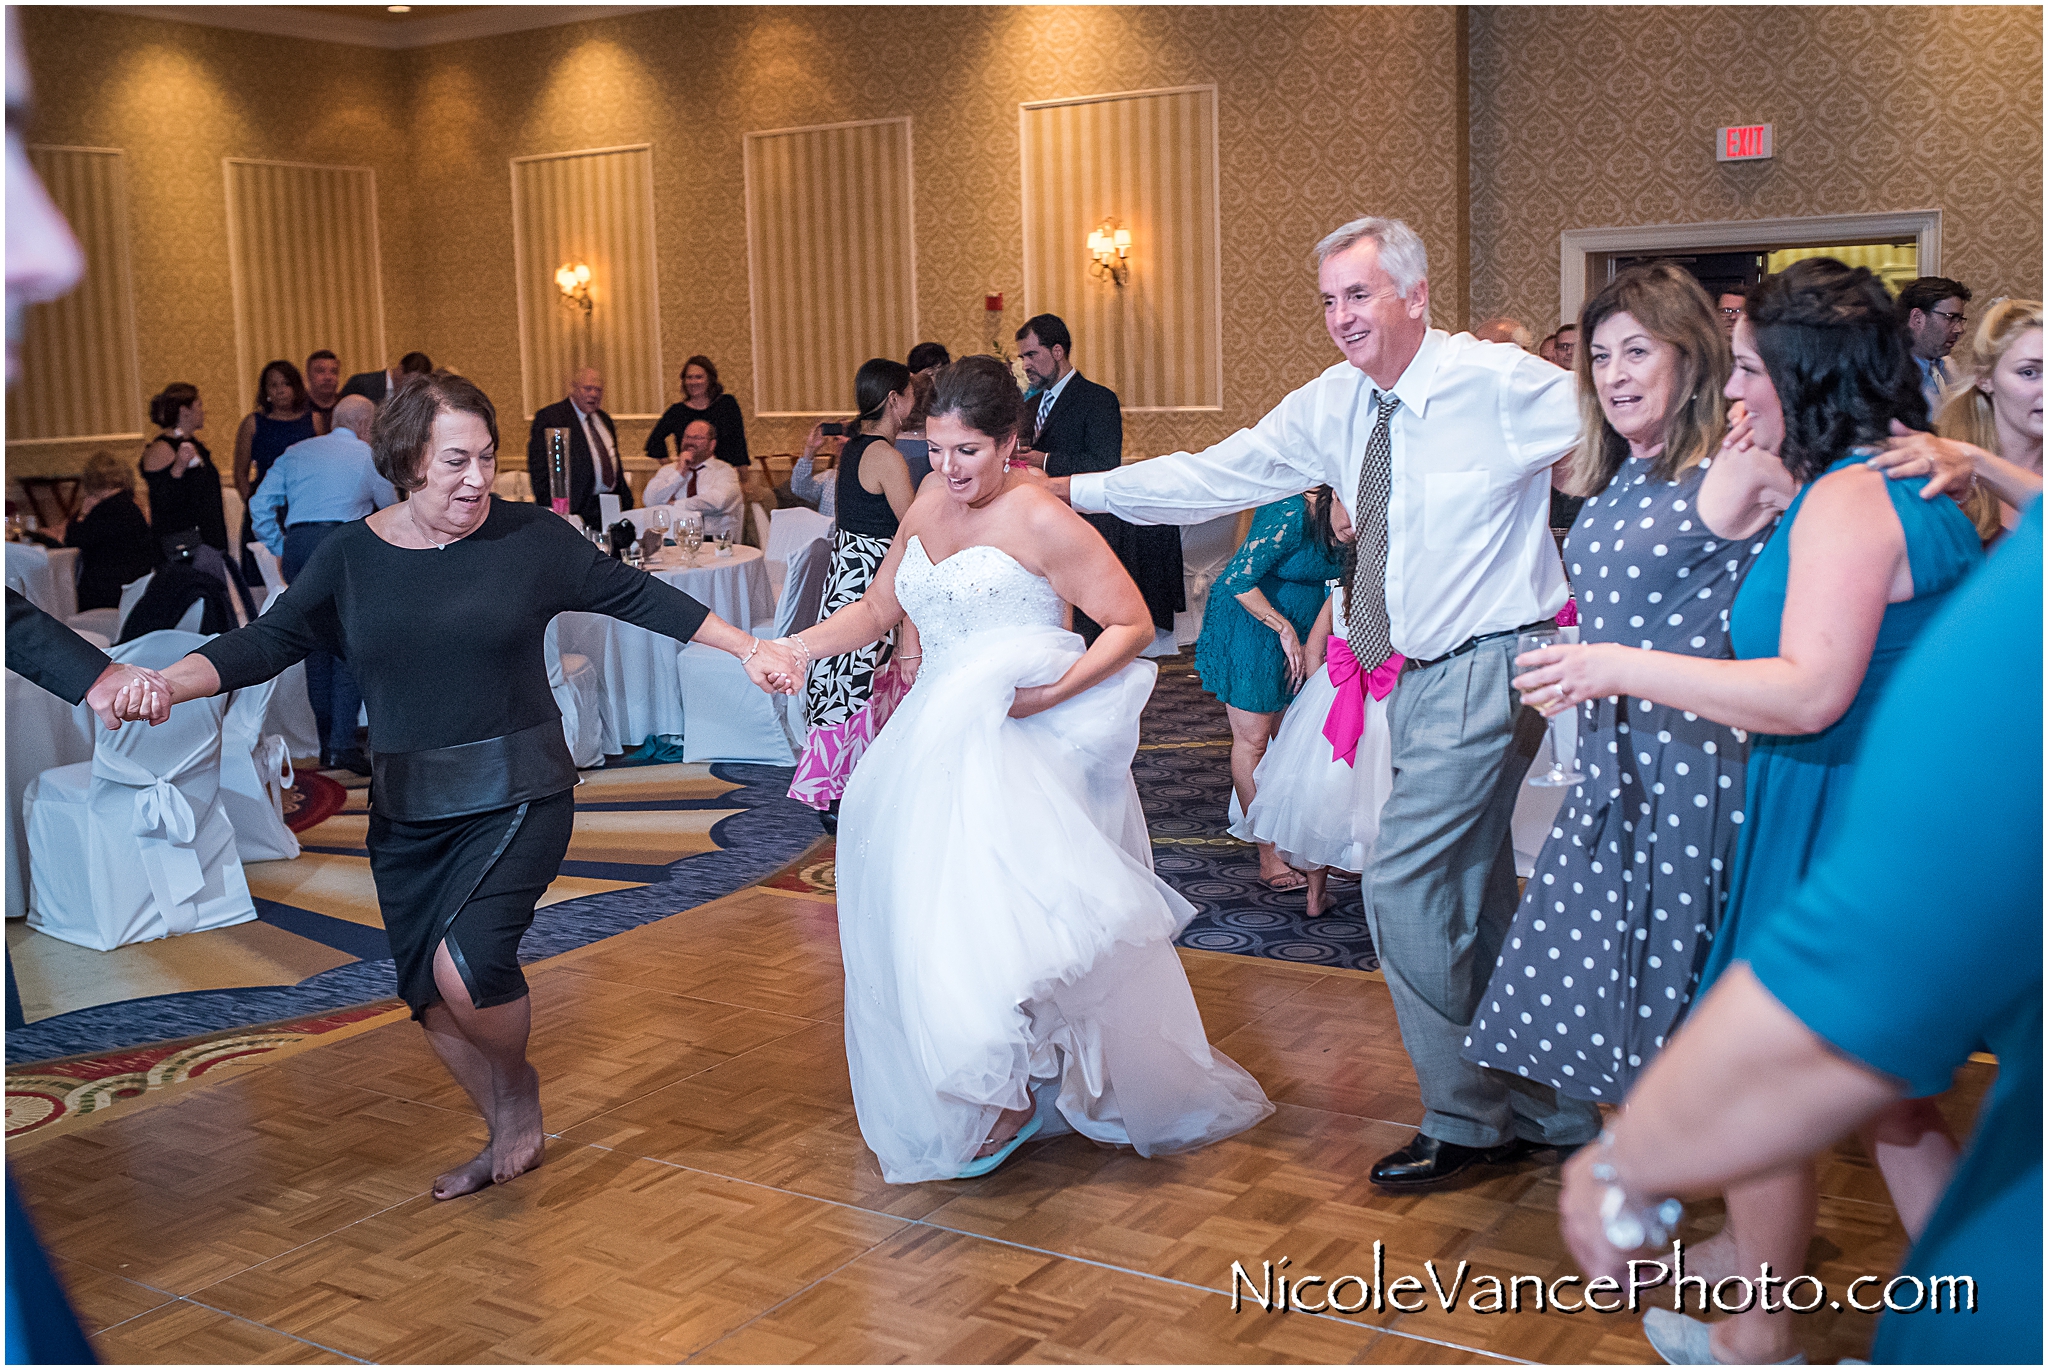 Dancing the Hora at the reception at Virginia Crossings.